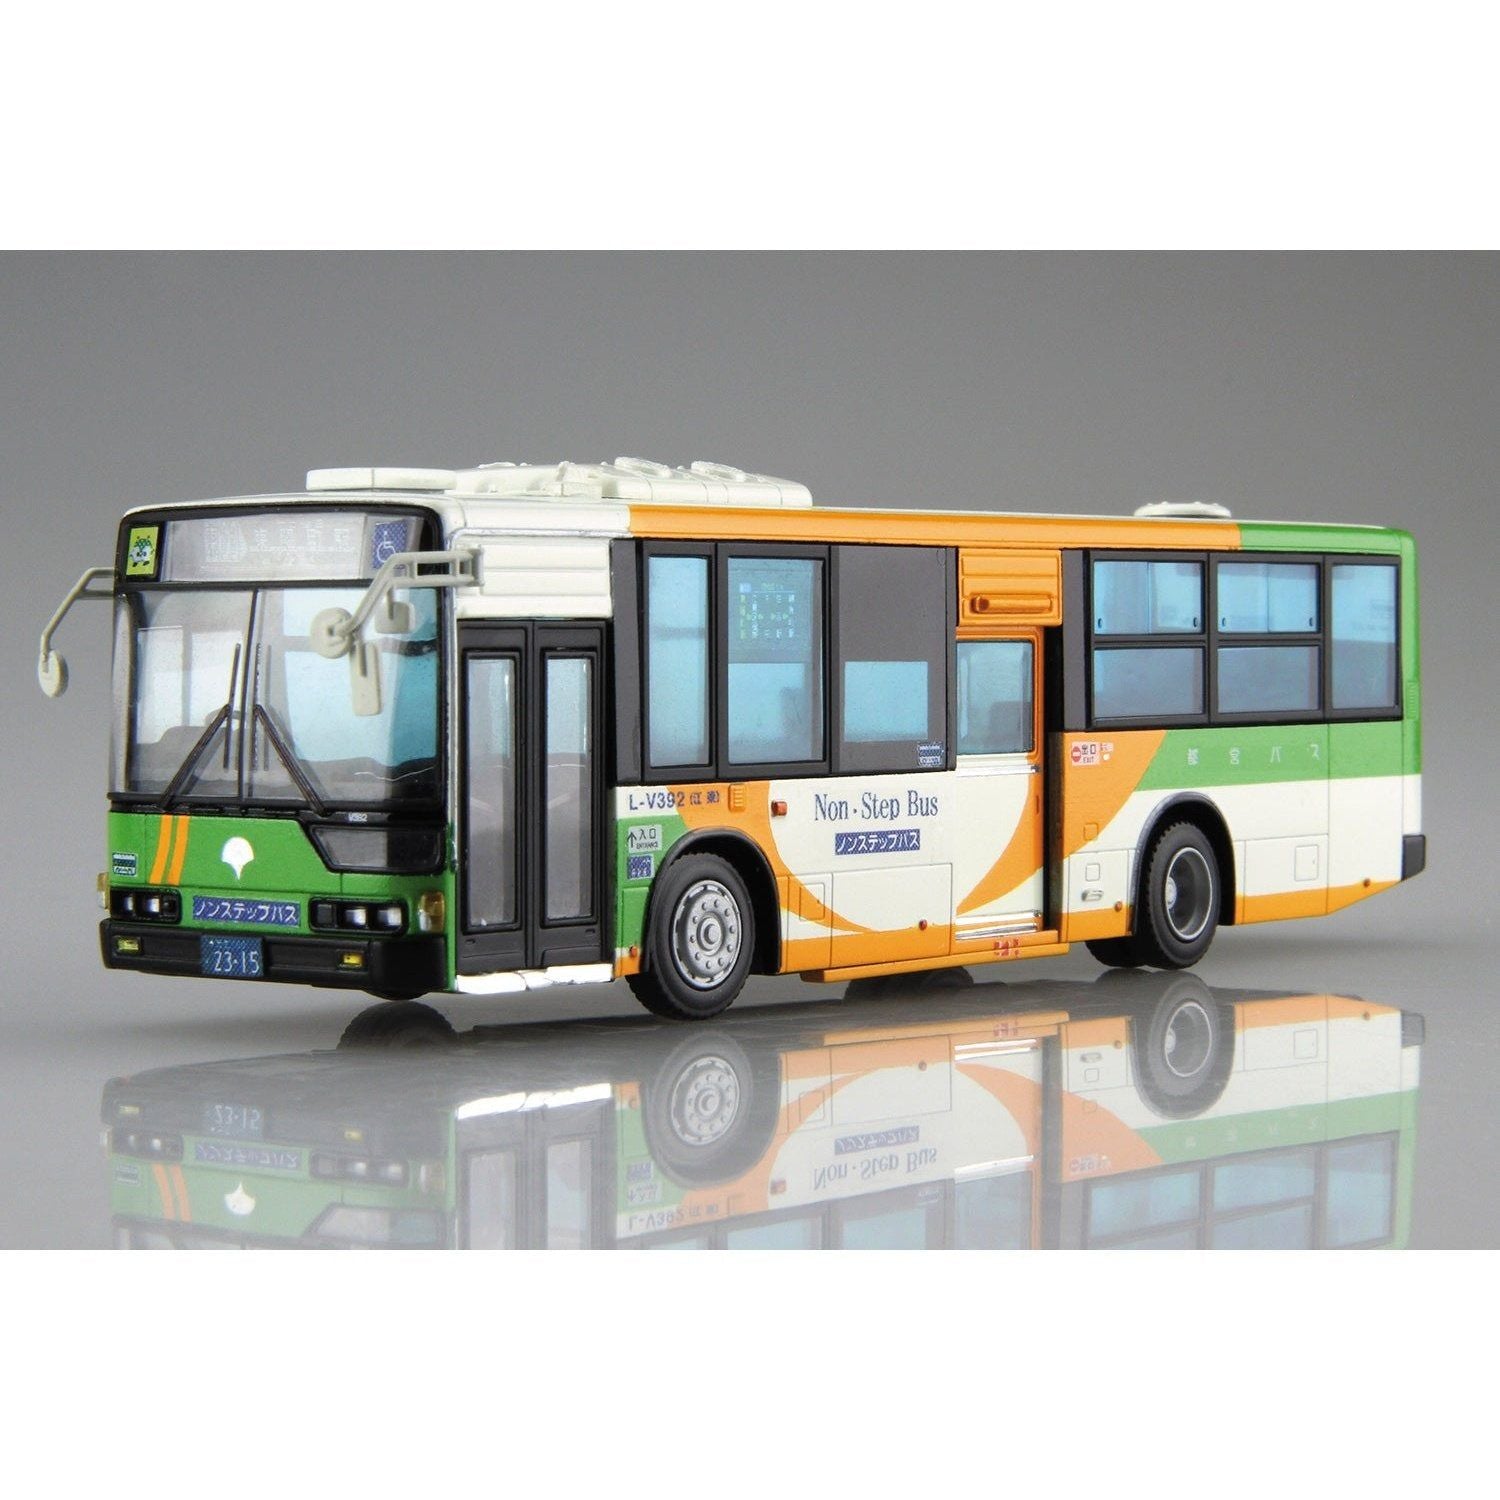 Aoshima 1/80 Working Vehicle 001 三菱.扶桑汽車 MP-37航空之星巴士/東京都交通局用車 組裝模型 - TwinnerModel